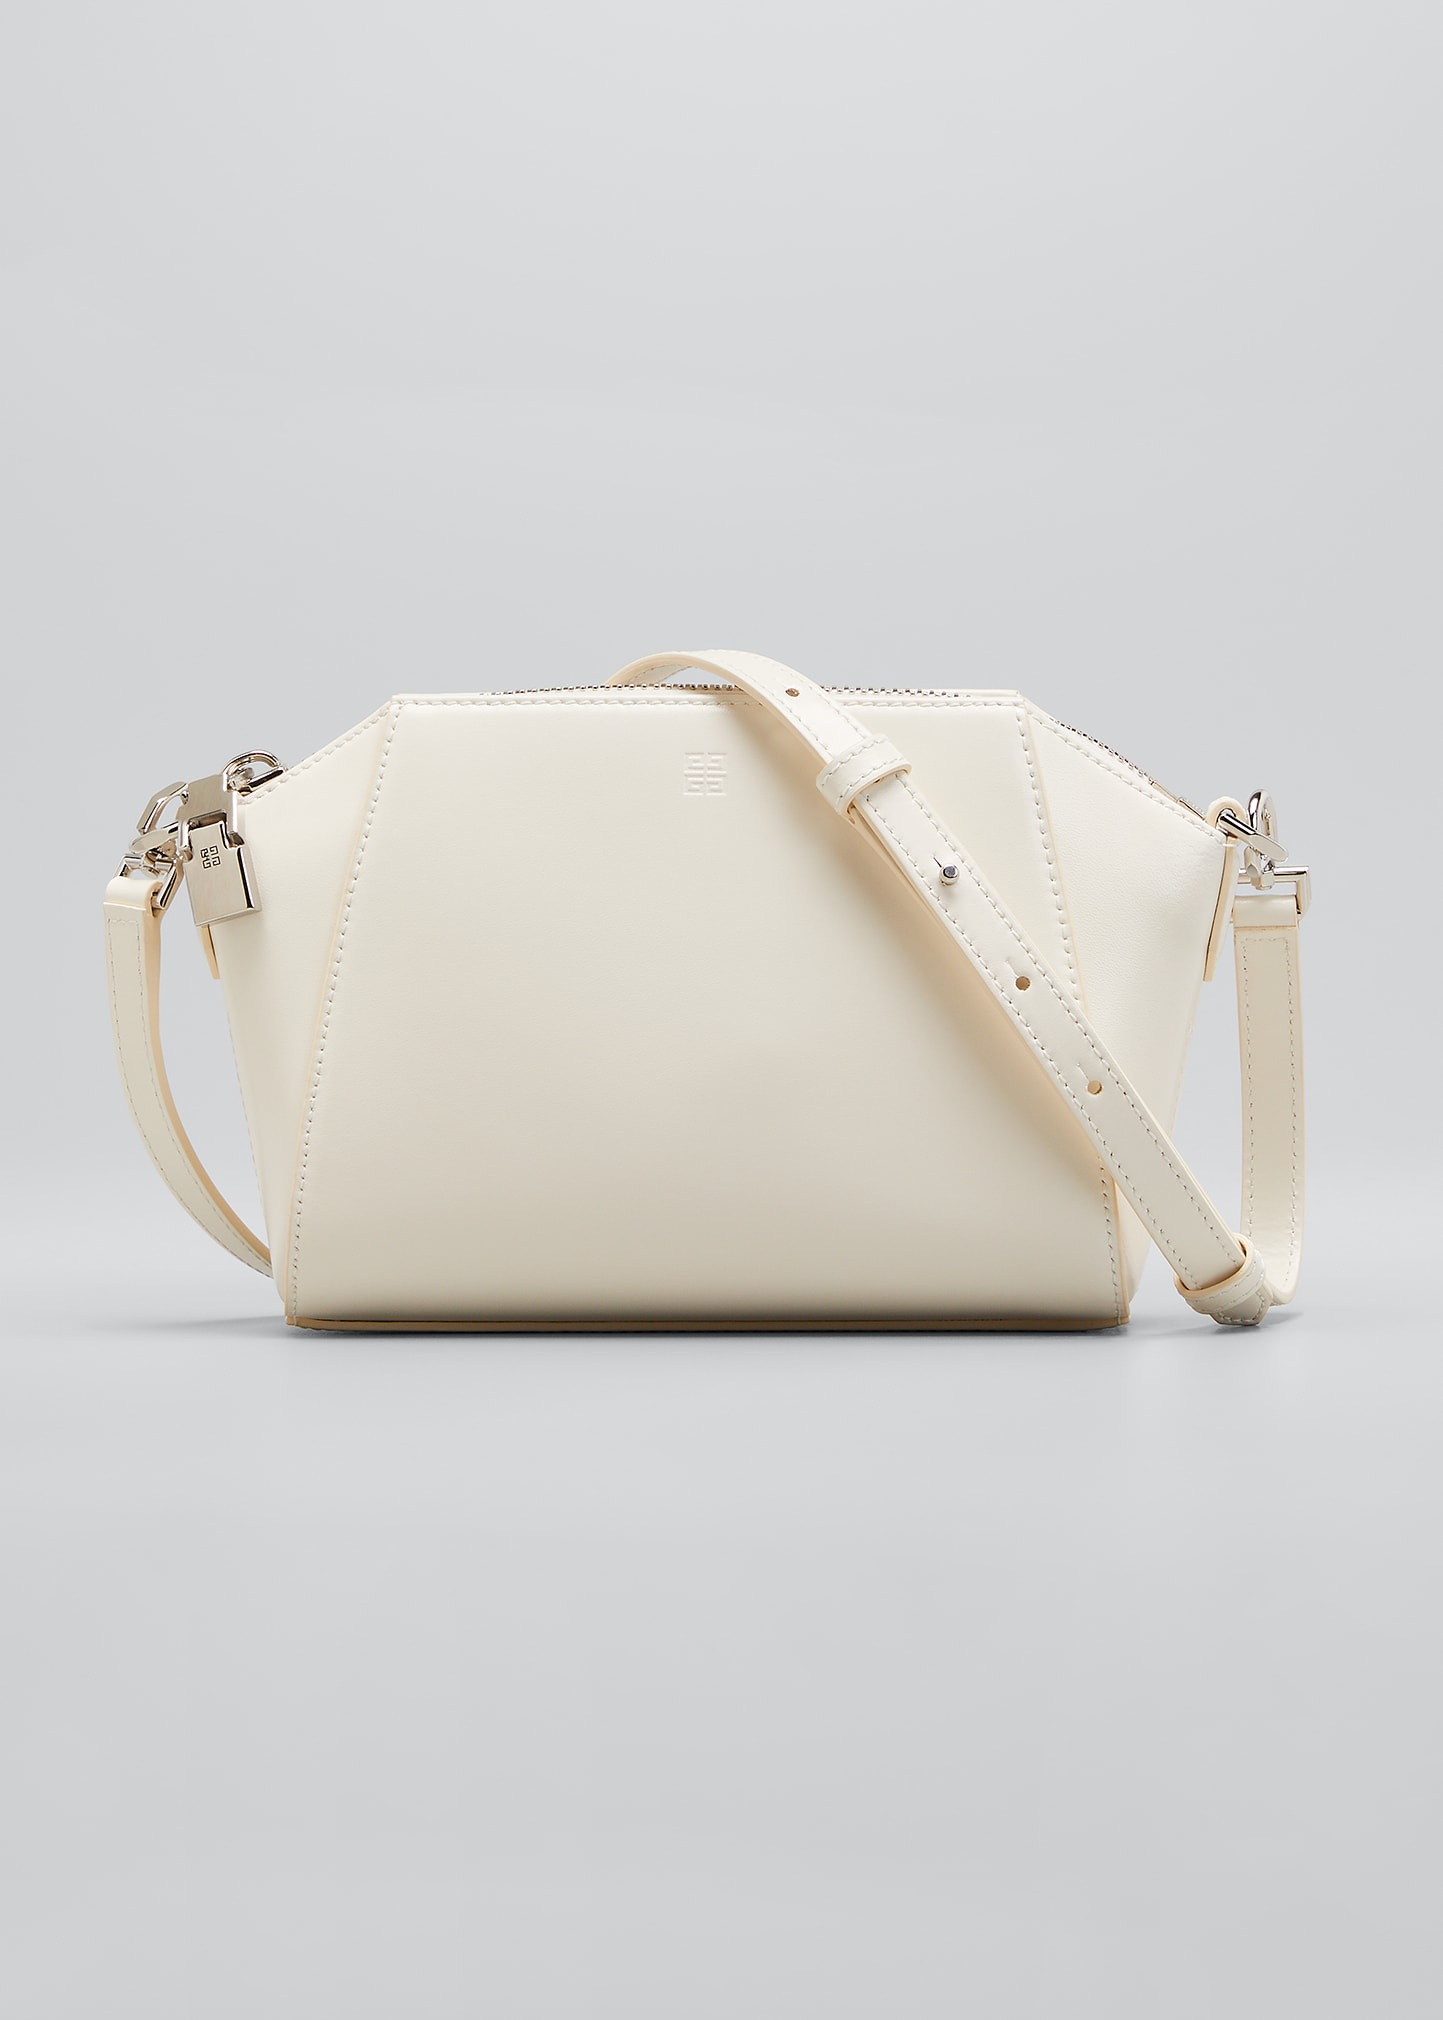 Givenchy Antigona XS Box Leather Shoulder Bag